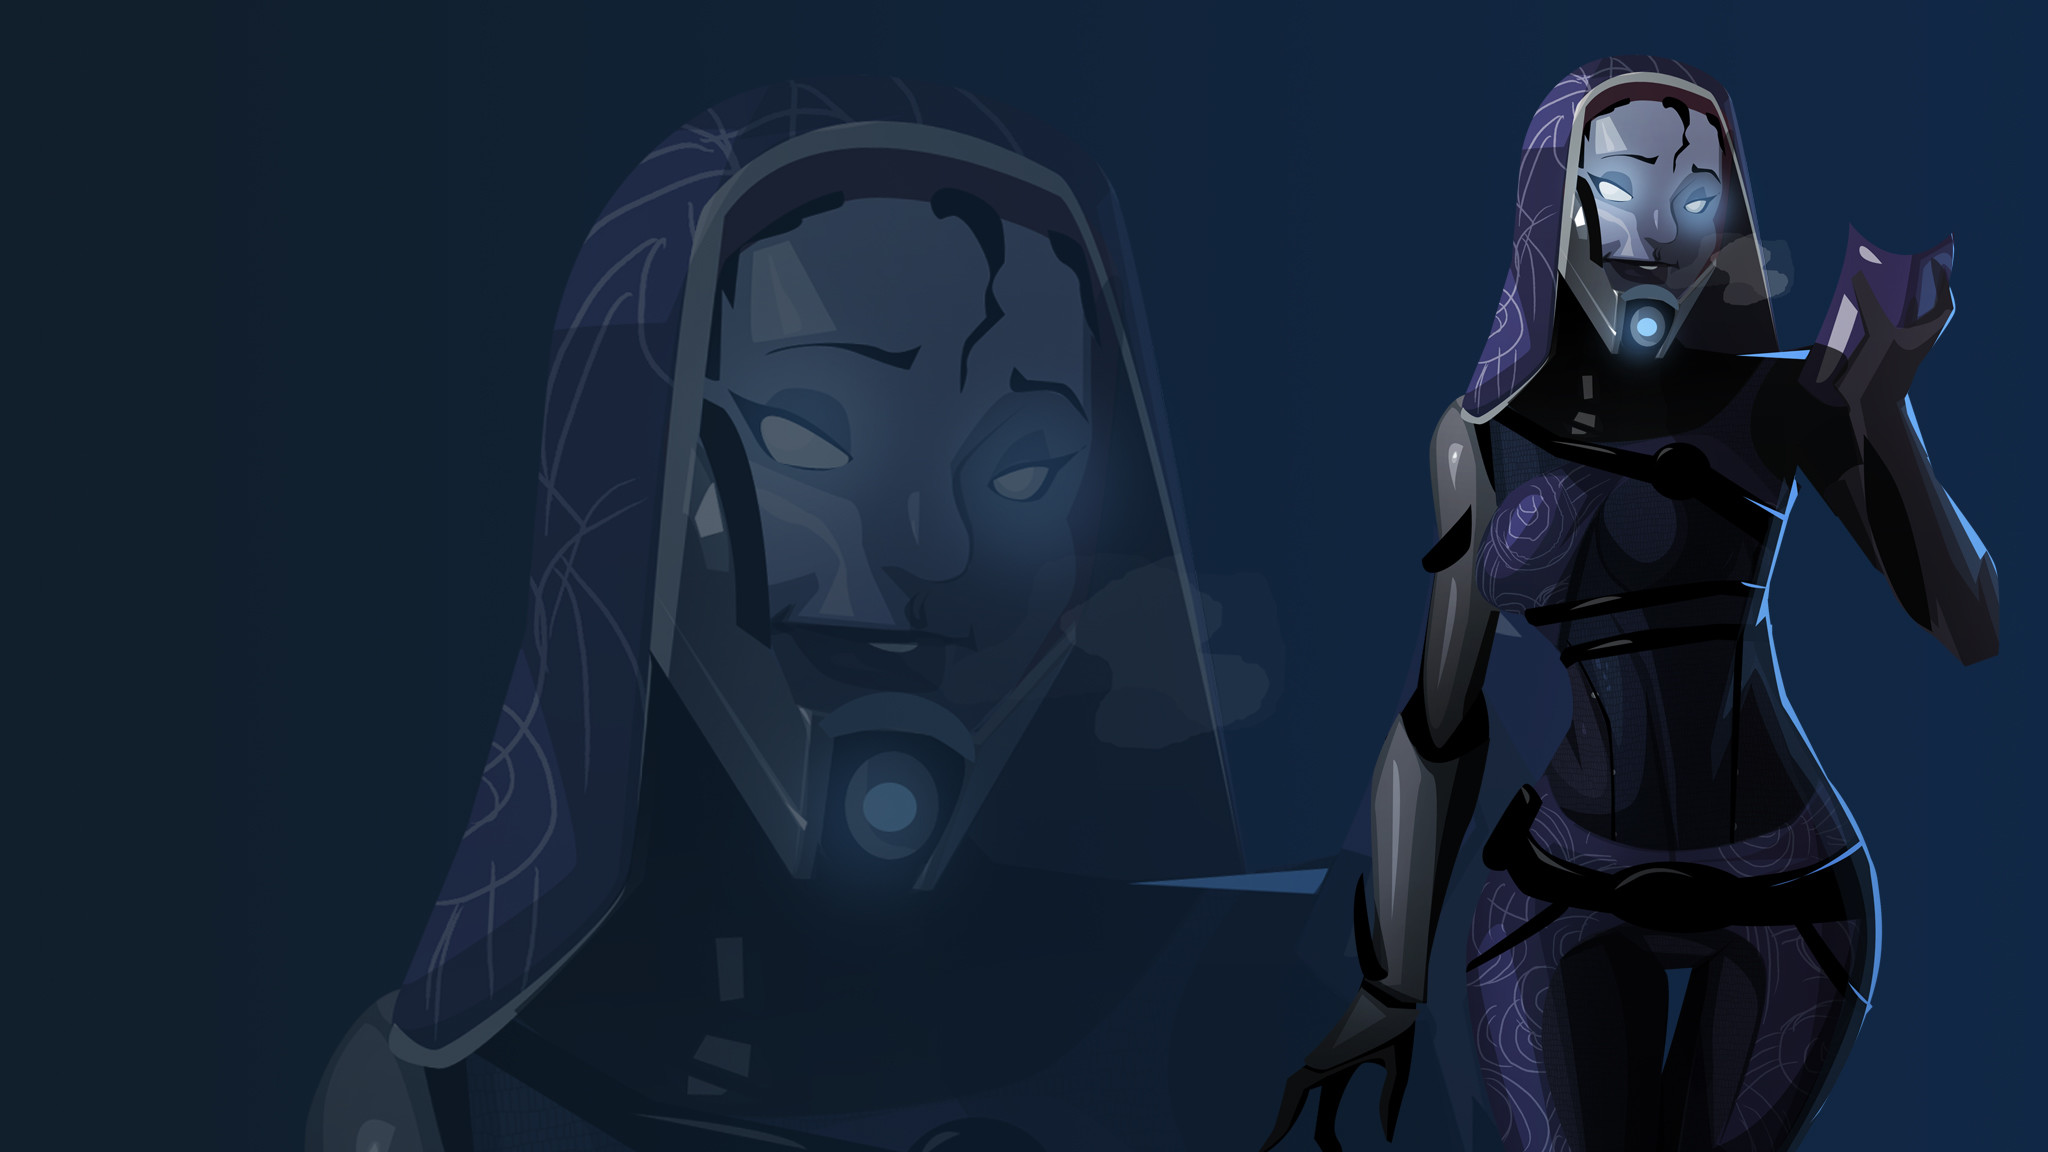 2048x1152 Maskless Tali Wallpaper by morganagod.deviantart.com on @deviantART Â· Mass  Effect Tali